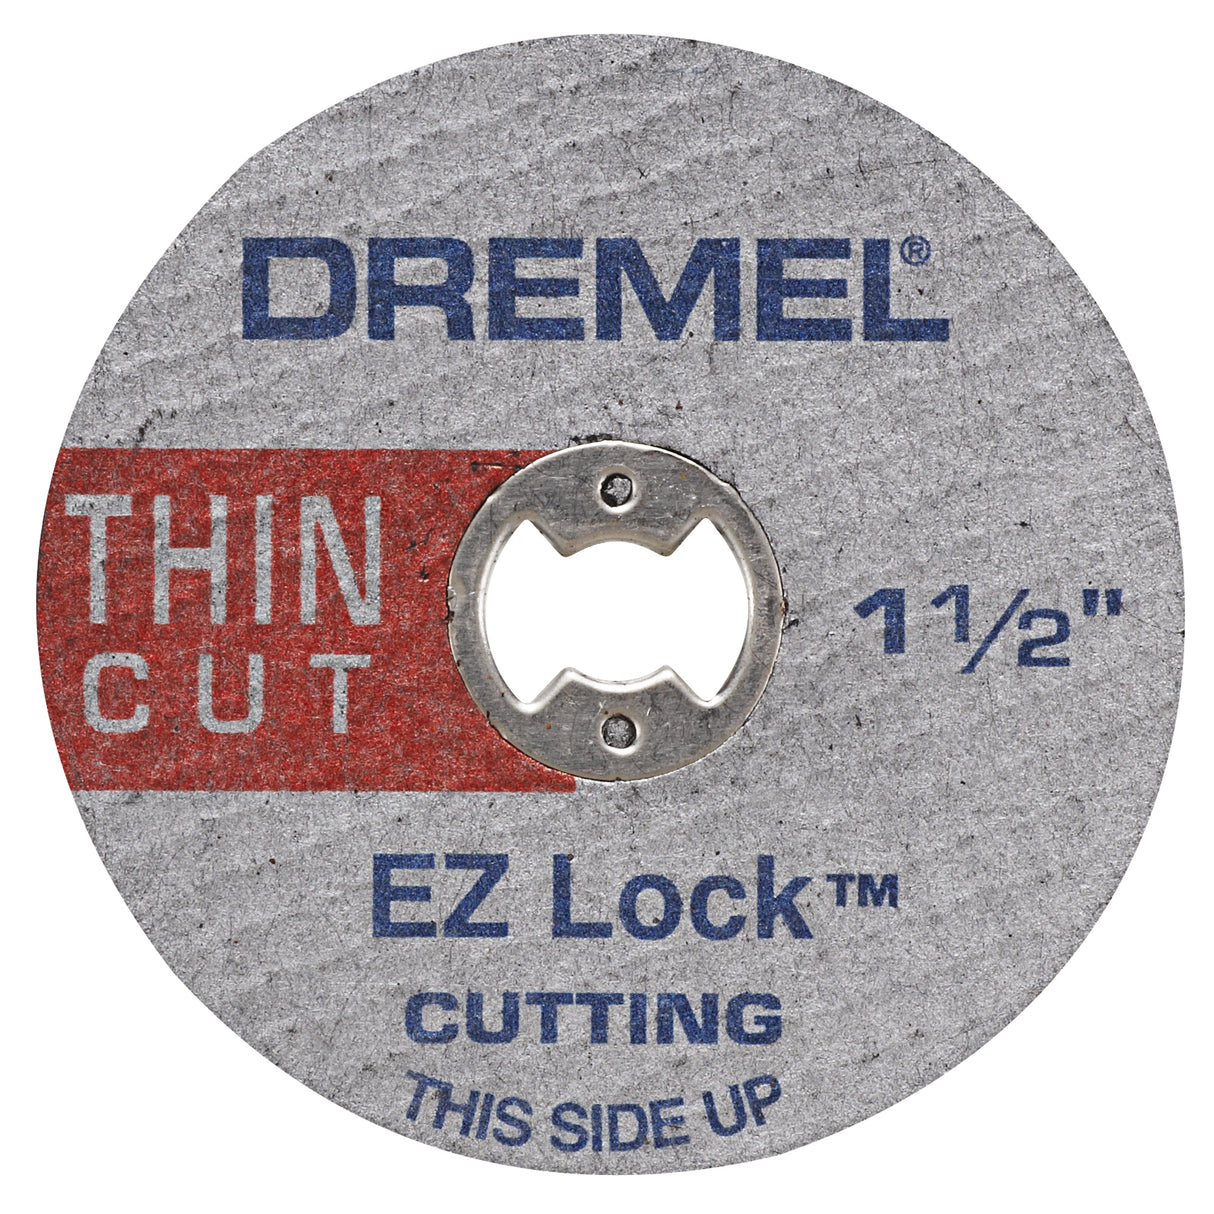 Dremel EZ Lock Thin Cut Off Wheels 38mm (EZ409) - 5 Pack - Hobbytech Toys